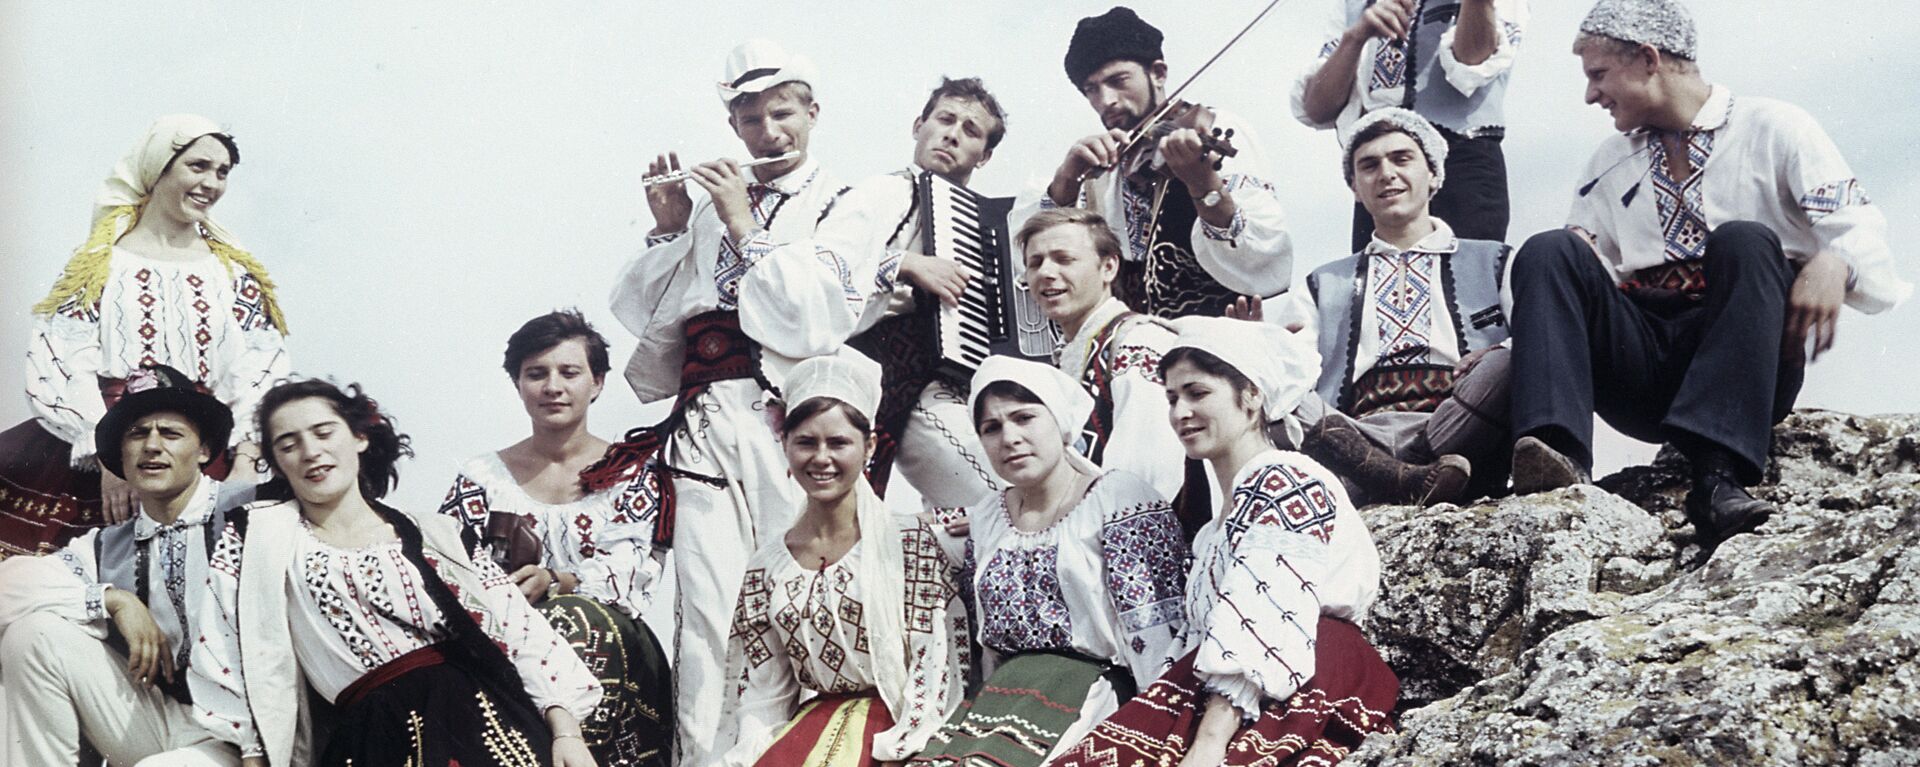 Молдавский народ, архивное фото. - Sputnik Молдова, 1920, 28.08.2020